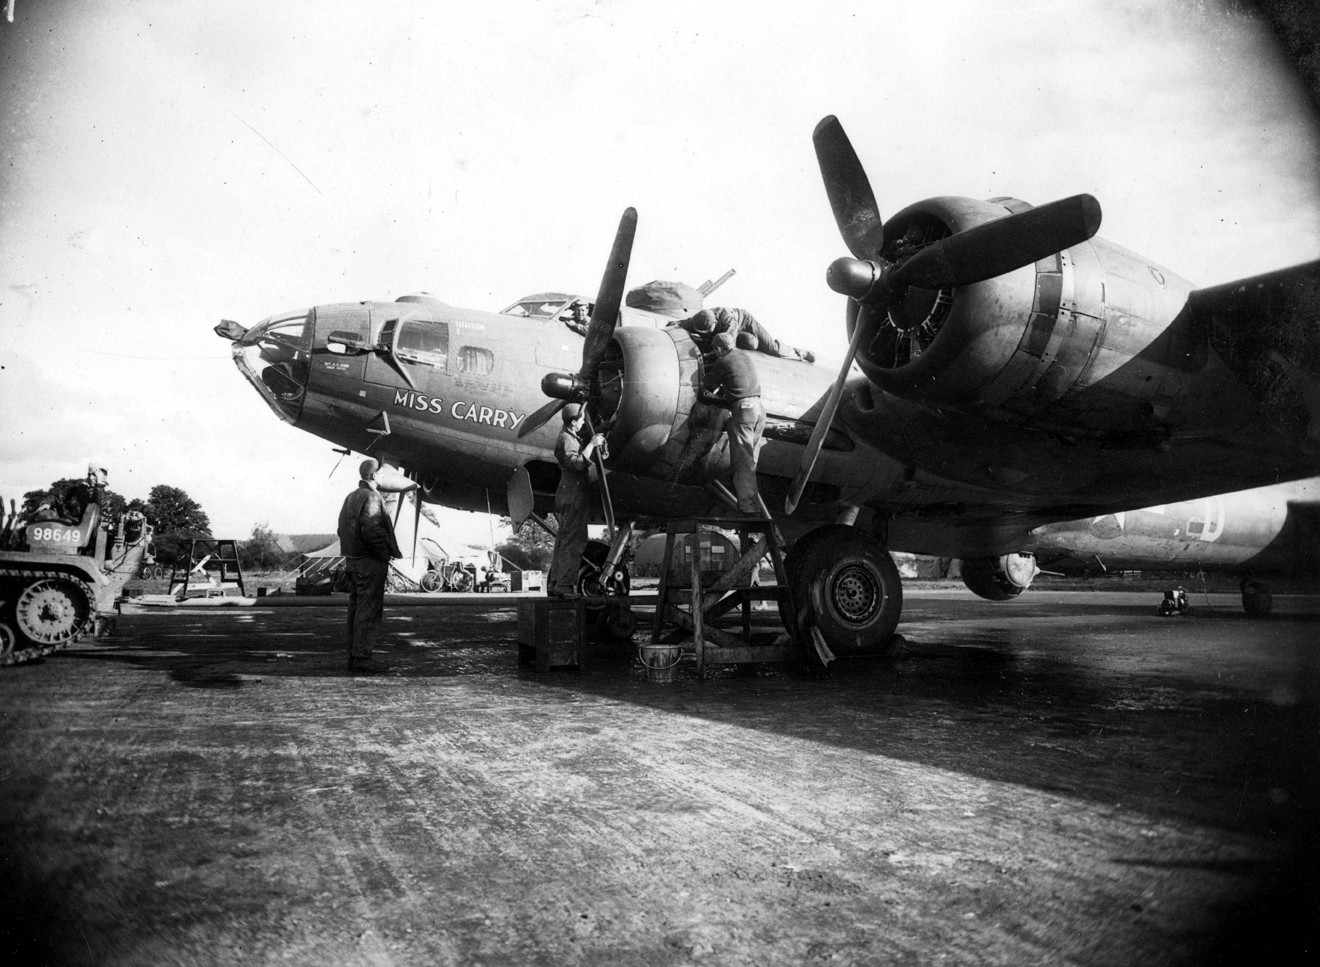 B-17 #42-30325 / Miss Carry